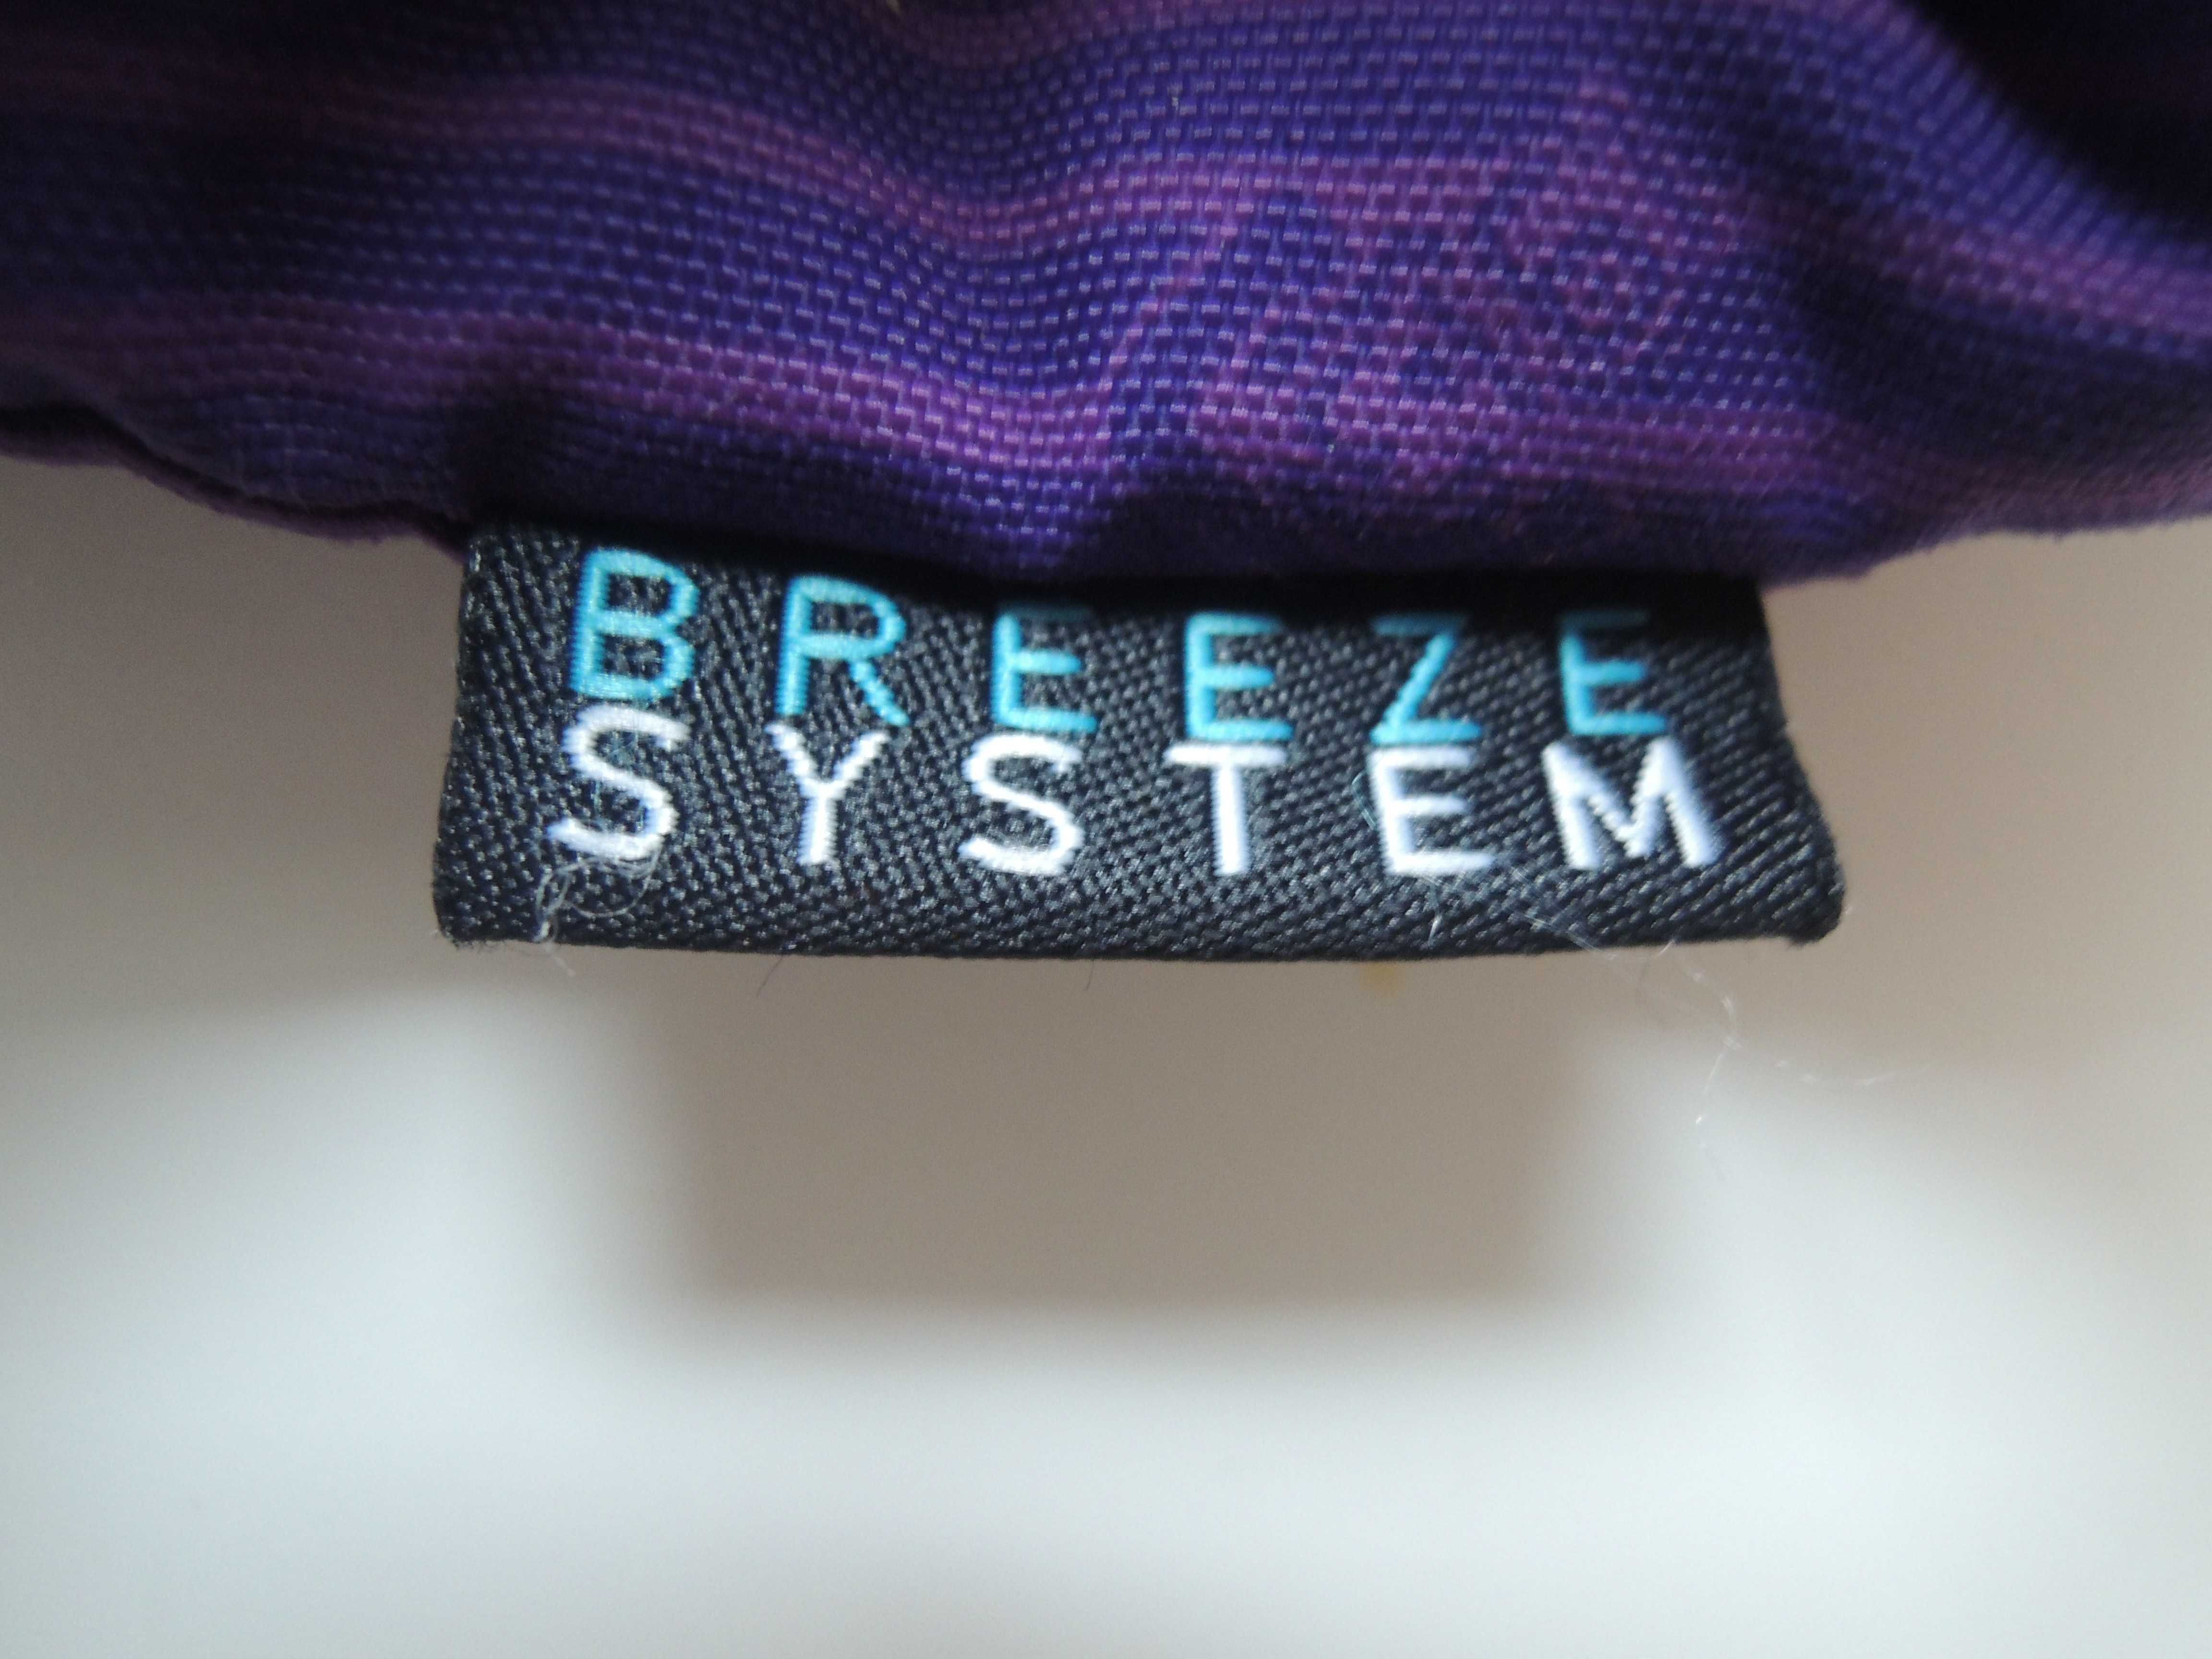 мембранная зимняя шапка ушанка Didriksons Breeze System р.54 (4-7 лет)